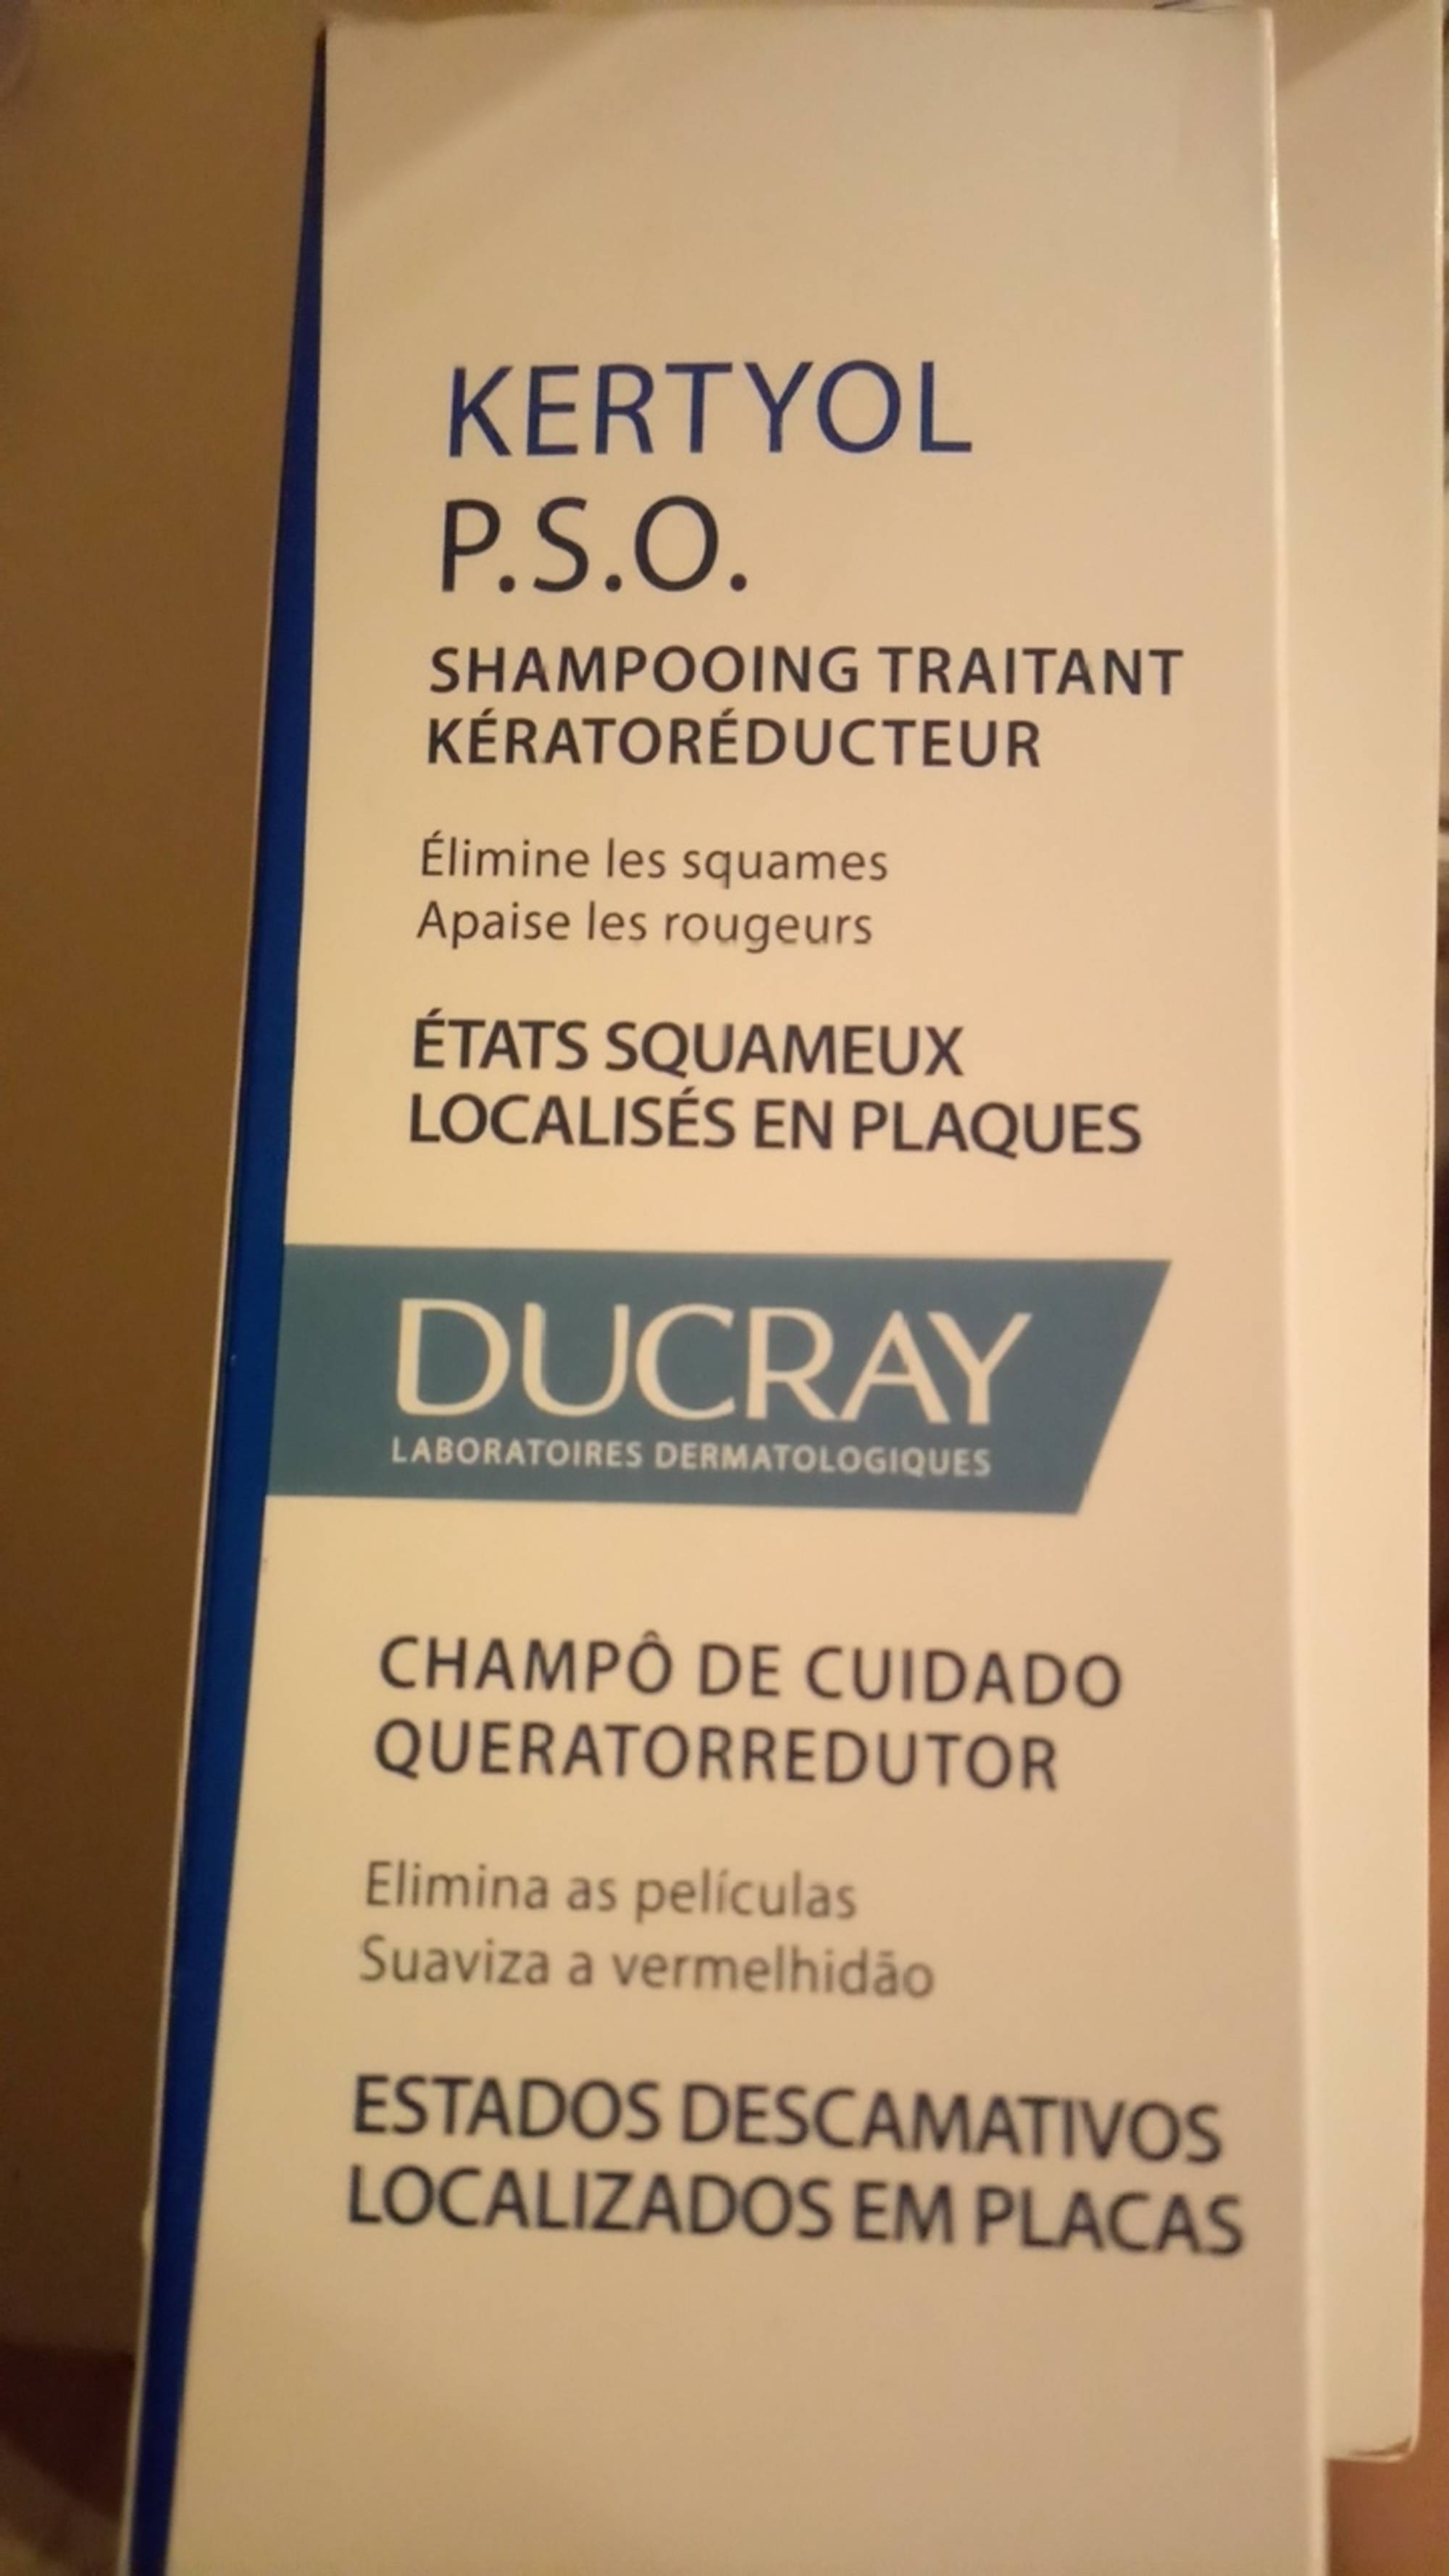 DUCRAY - Kertyol P.S.O. - Shampooing traitant